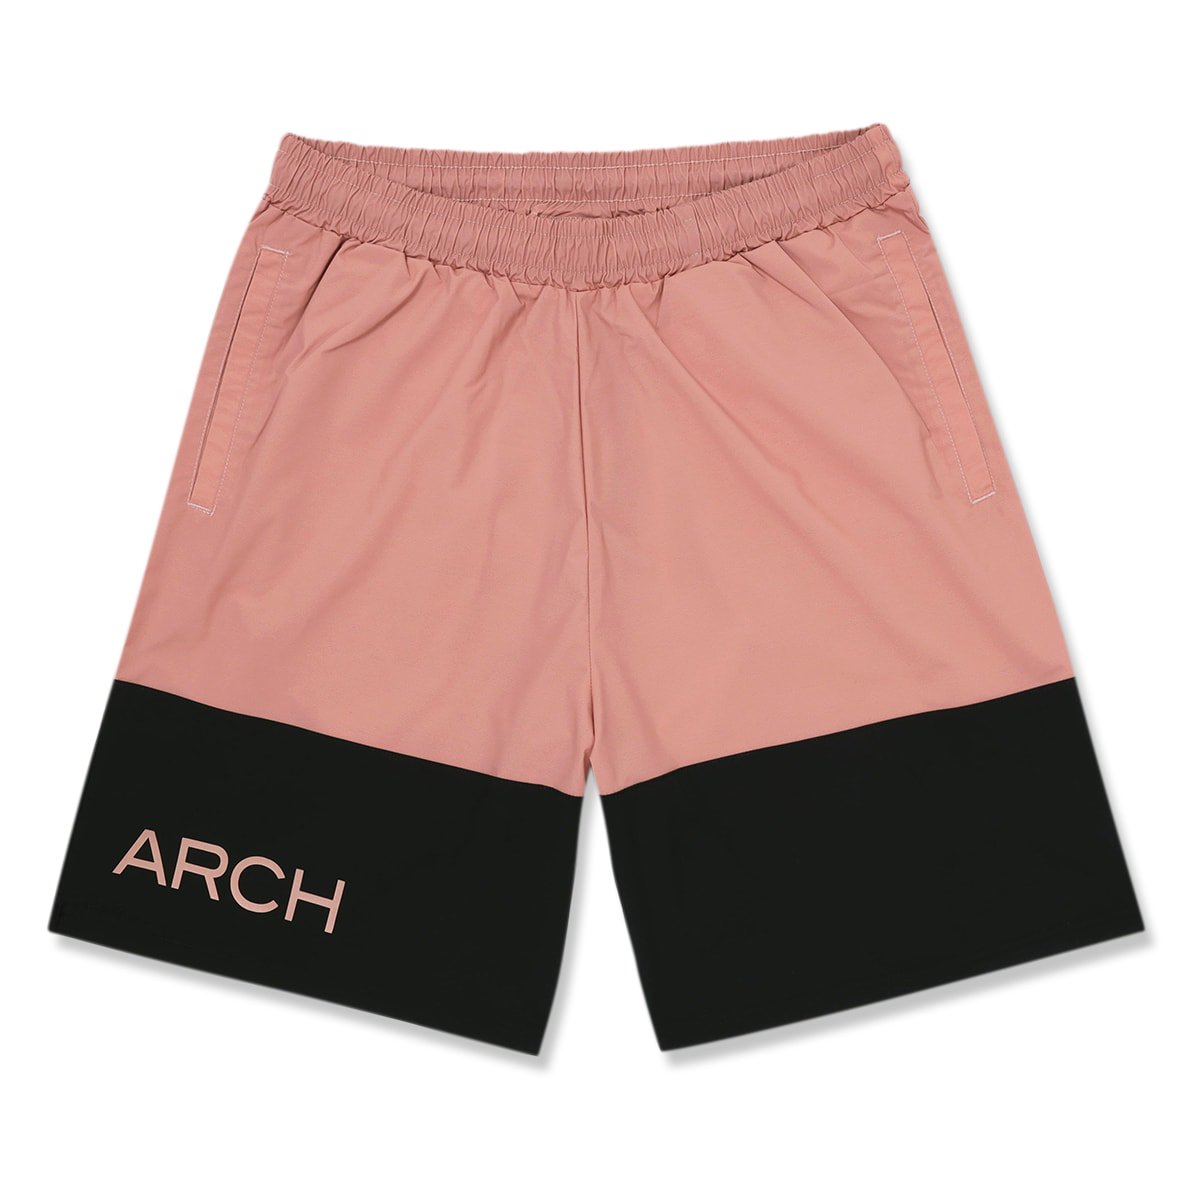 two-tone flex shorts【mellow rose/black】 - Arch ☆ アーチ [バスケットボール＆ライフスタイルウェア  Basketball&Lifestyle wear]